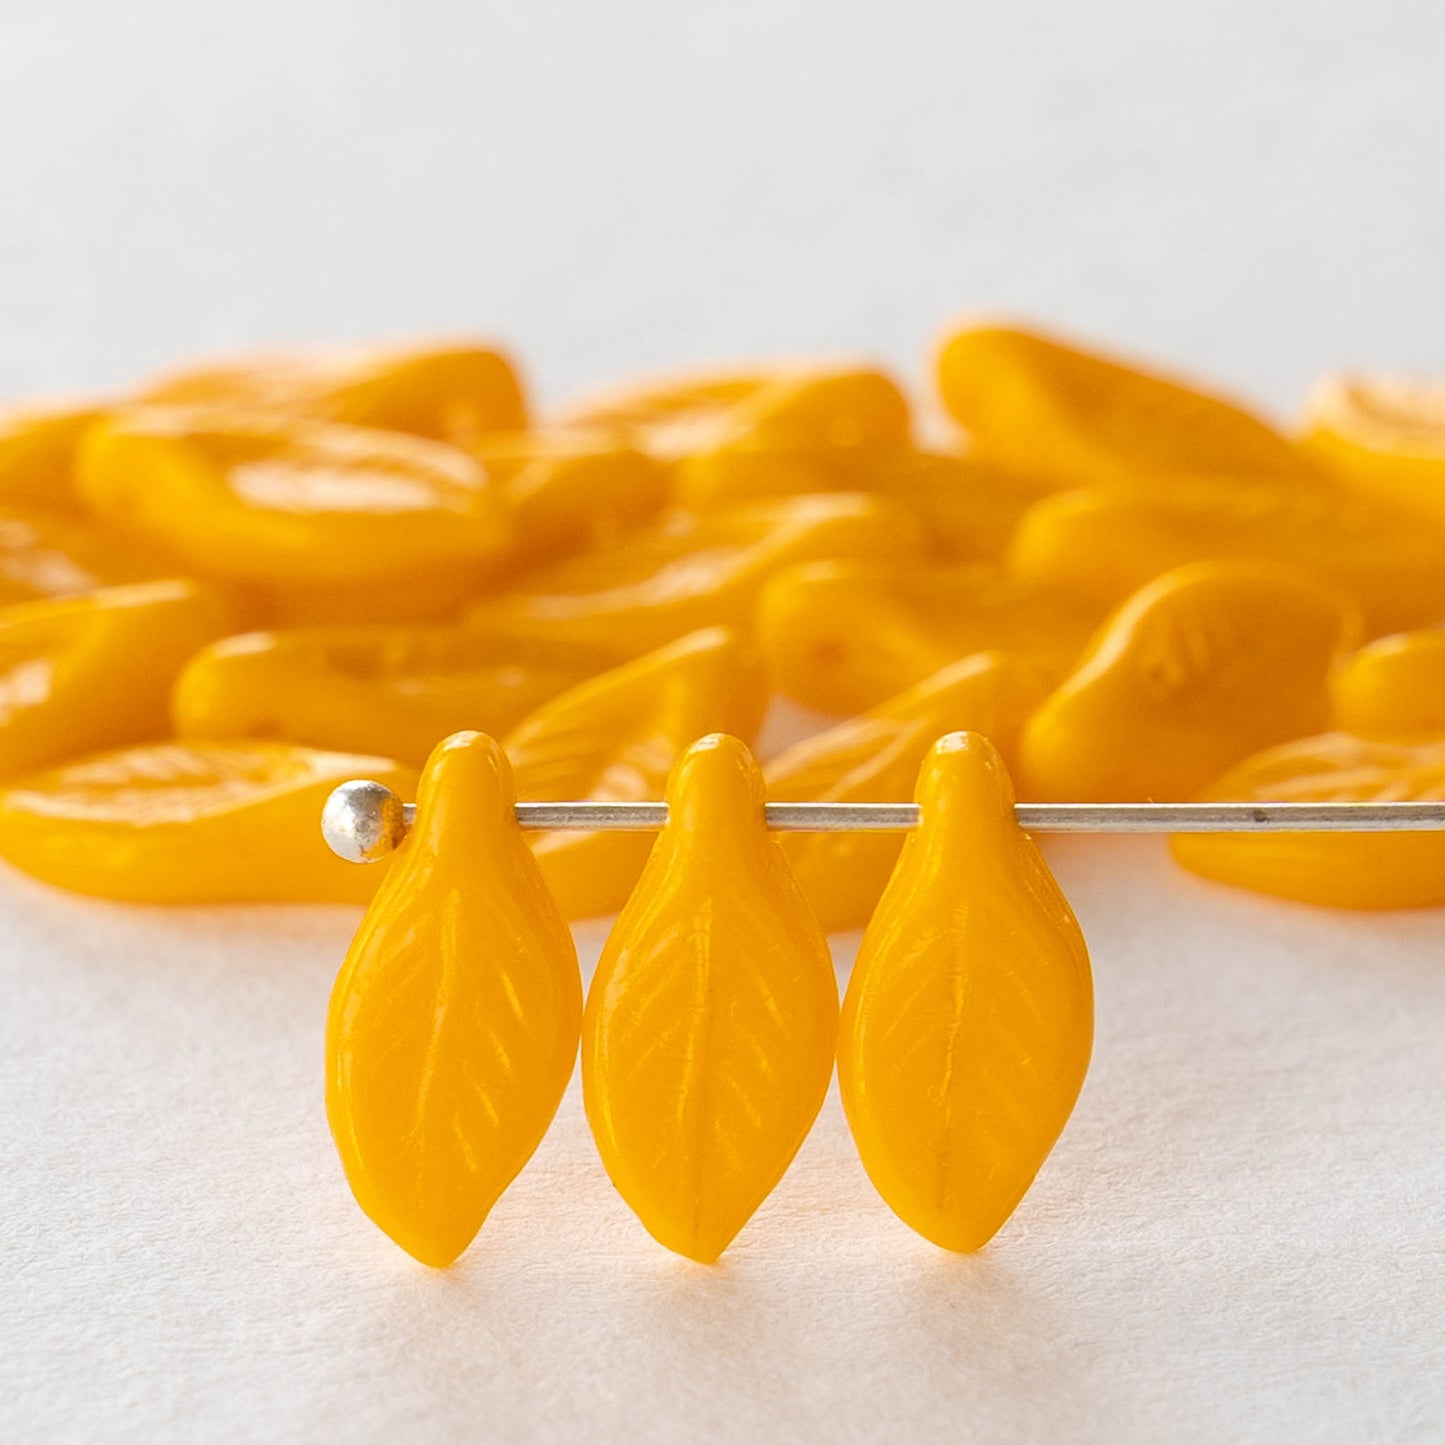 6x12mm Glass Leaf Beads - Opaque Sunflower Yellow - 30 beads